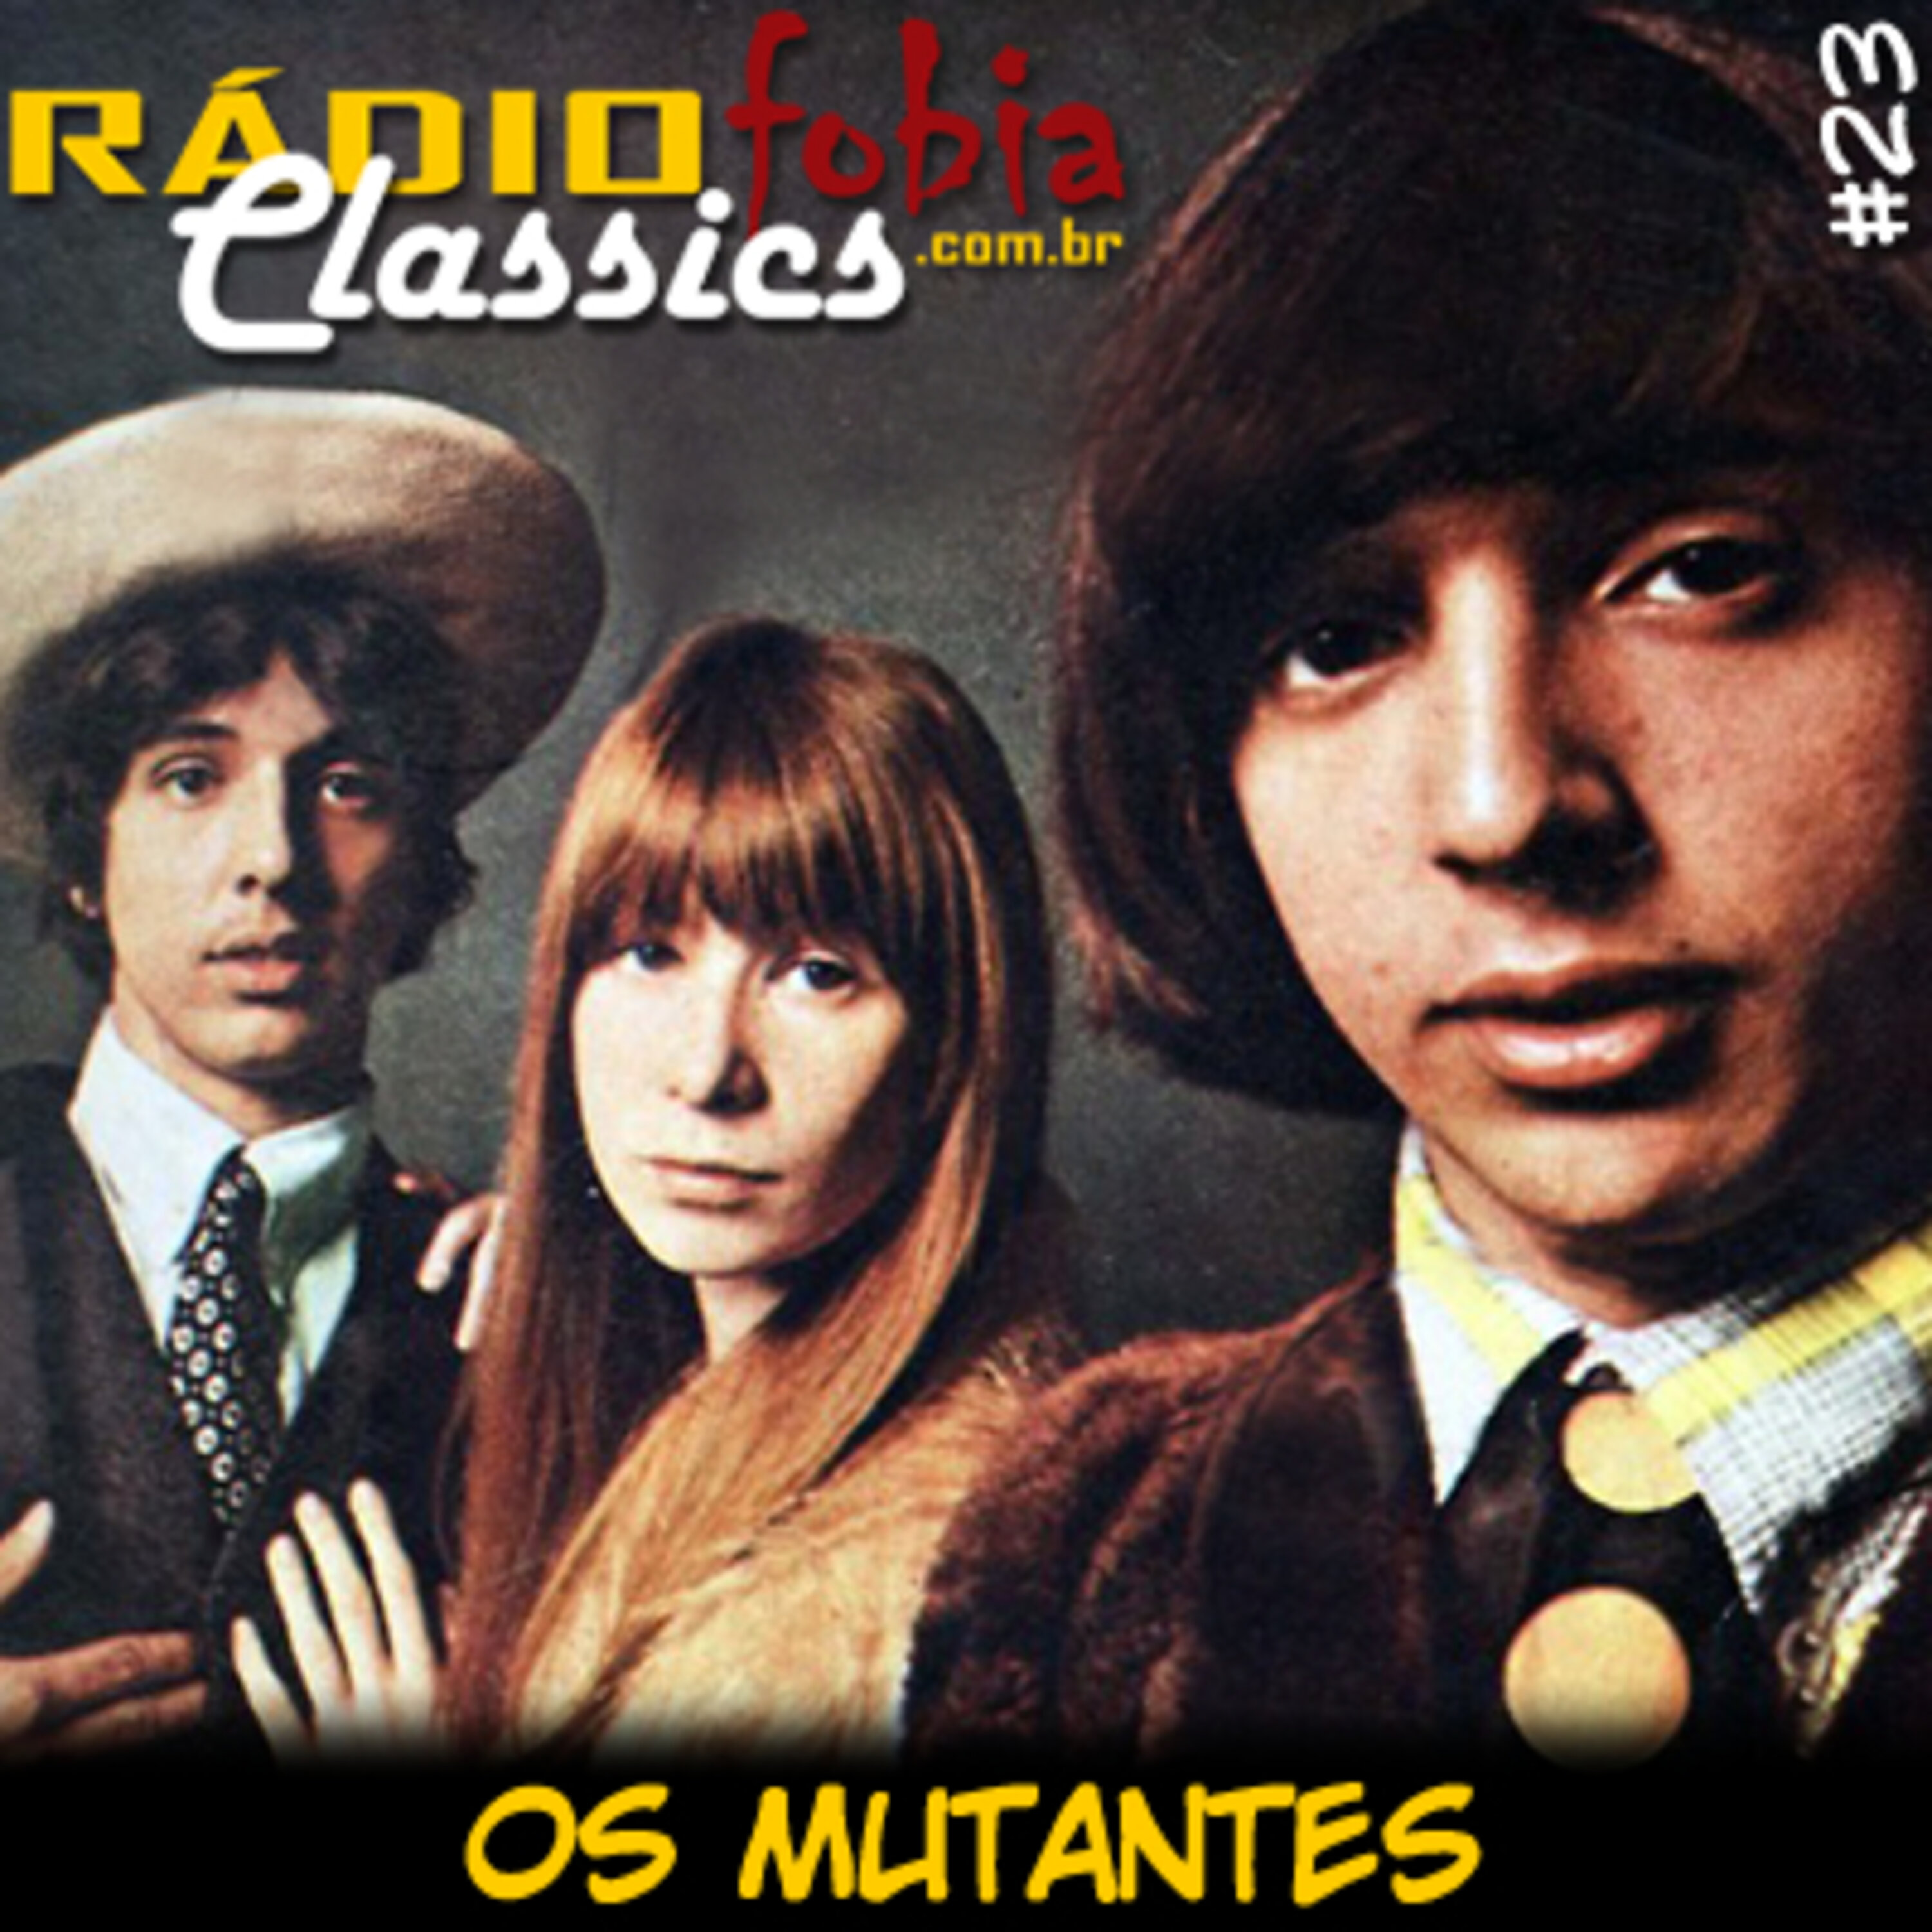 RÁDIOFOBIA Classics #23 – Os Mutantes